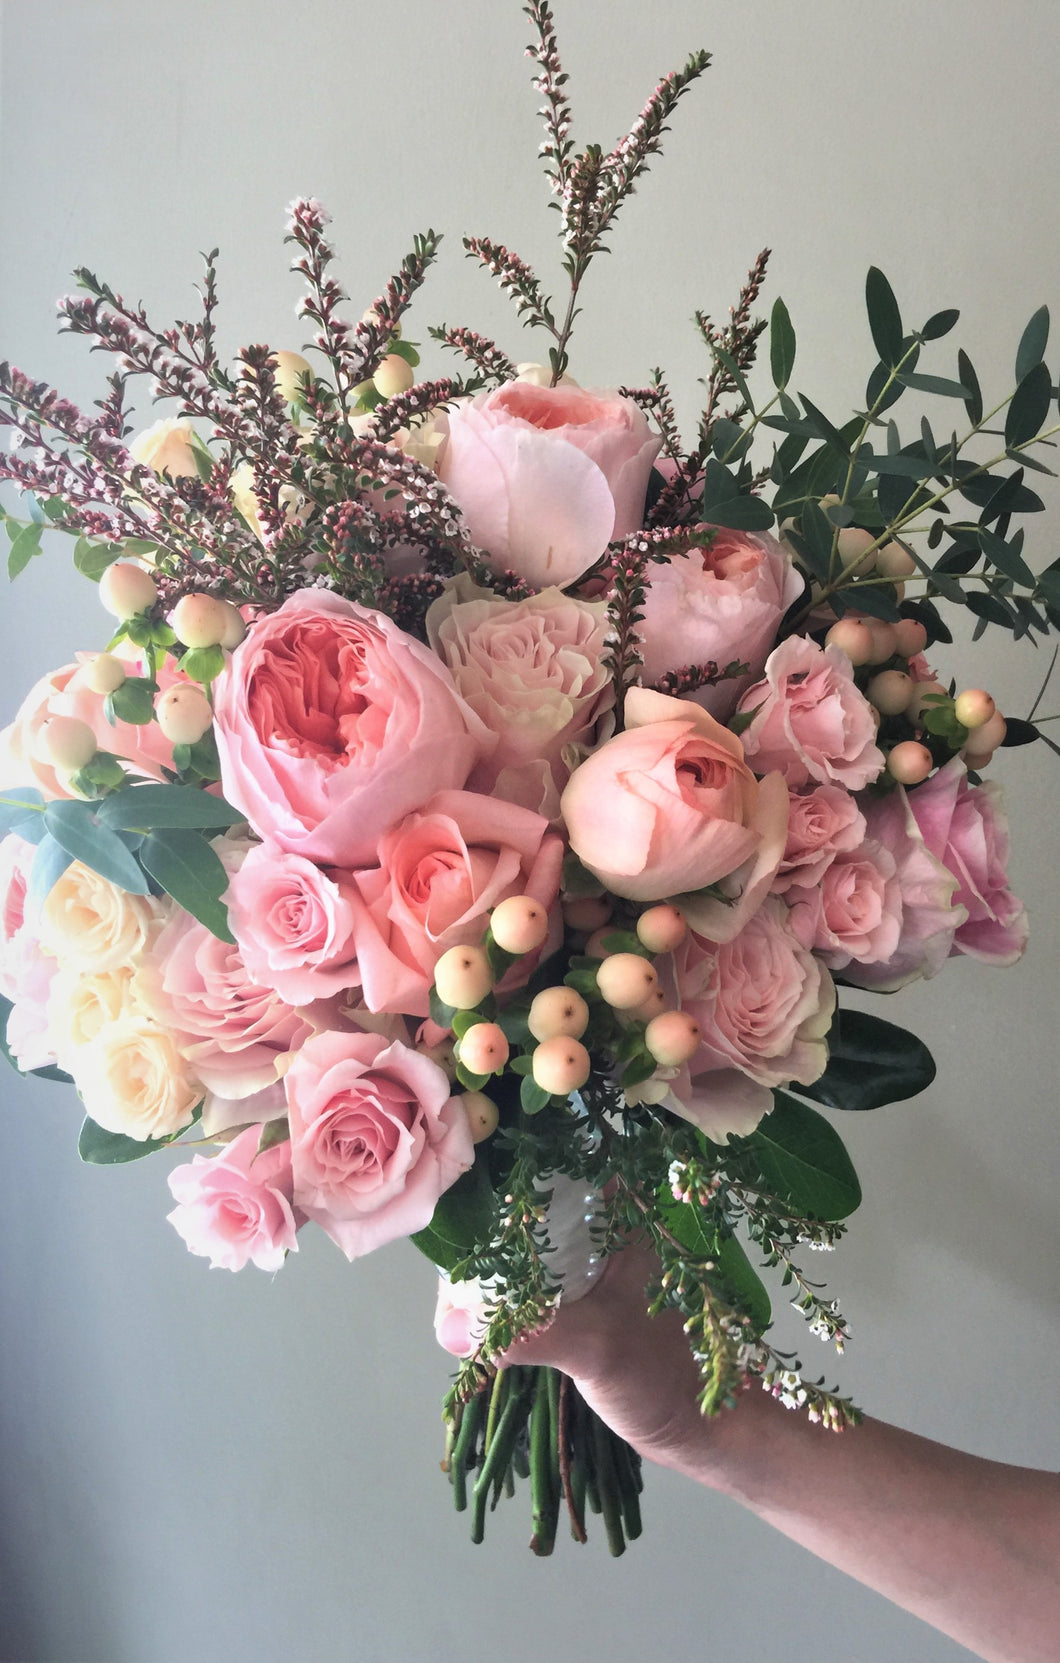 Watery Pastel Hand-tied Bridal Bouquet - Flowerplustoronto